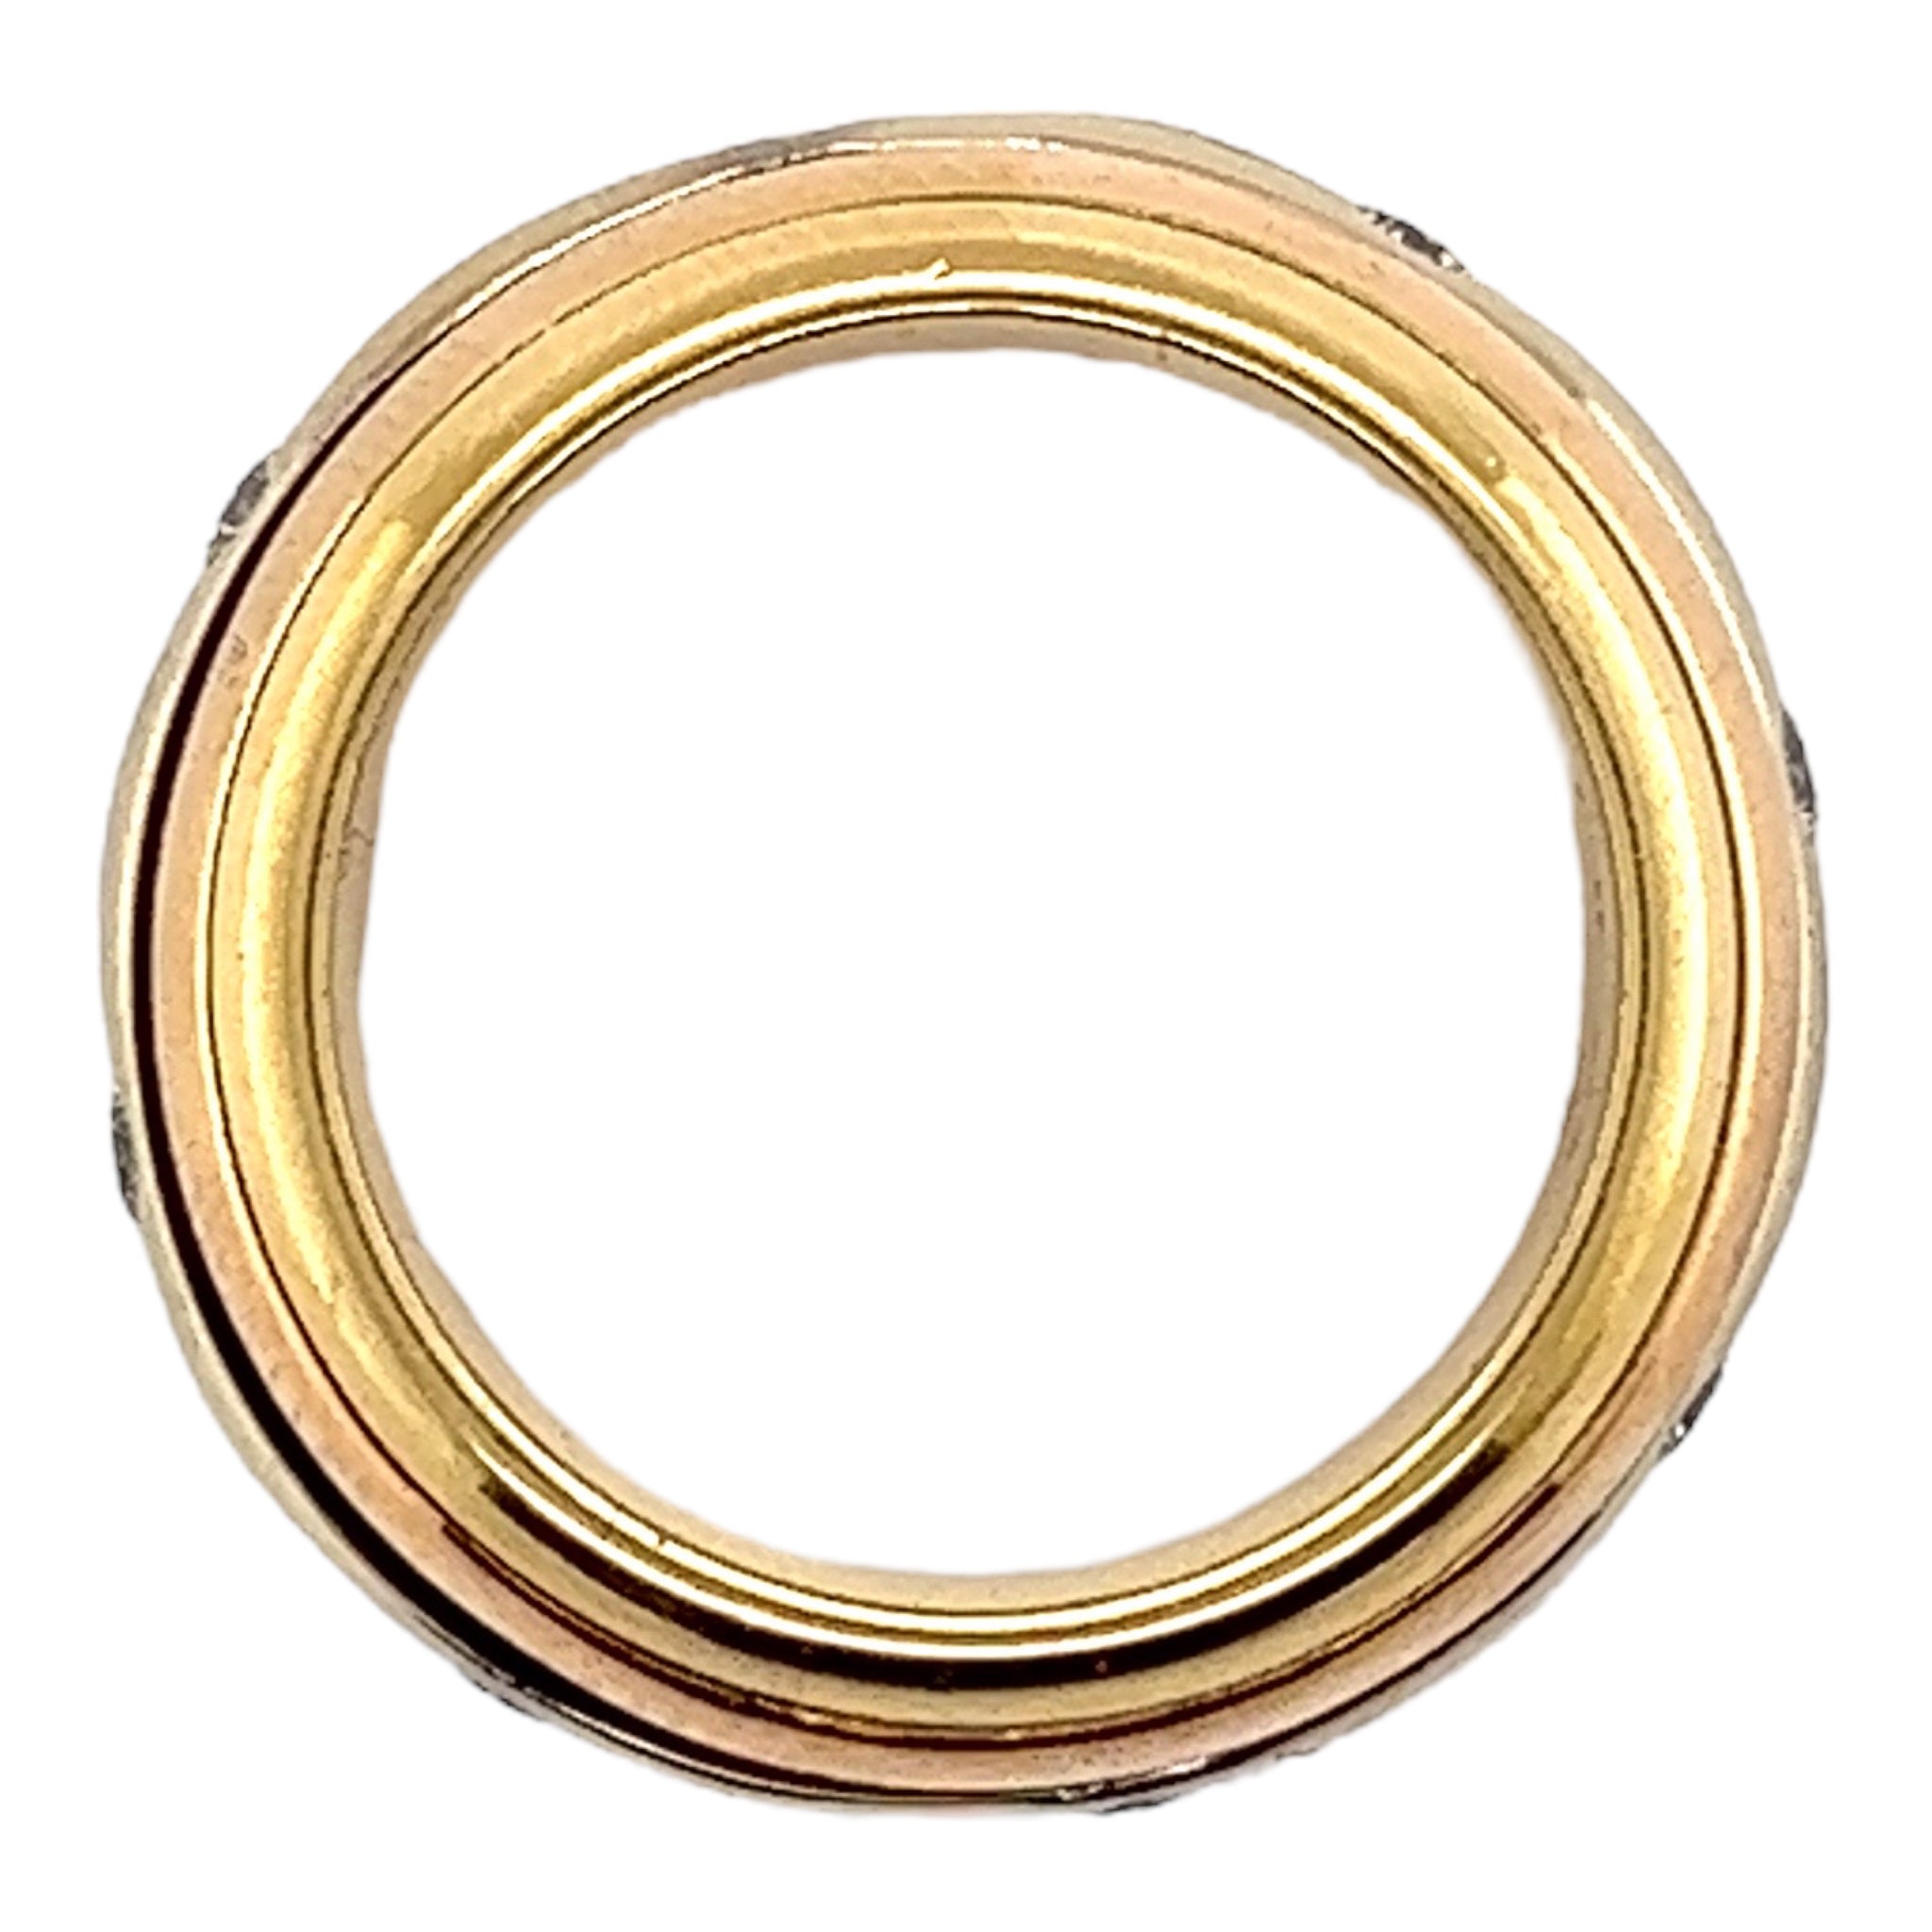 18ct Gold & Diamond Ring - Wildsmith Jewellery Rings